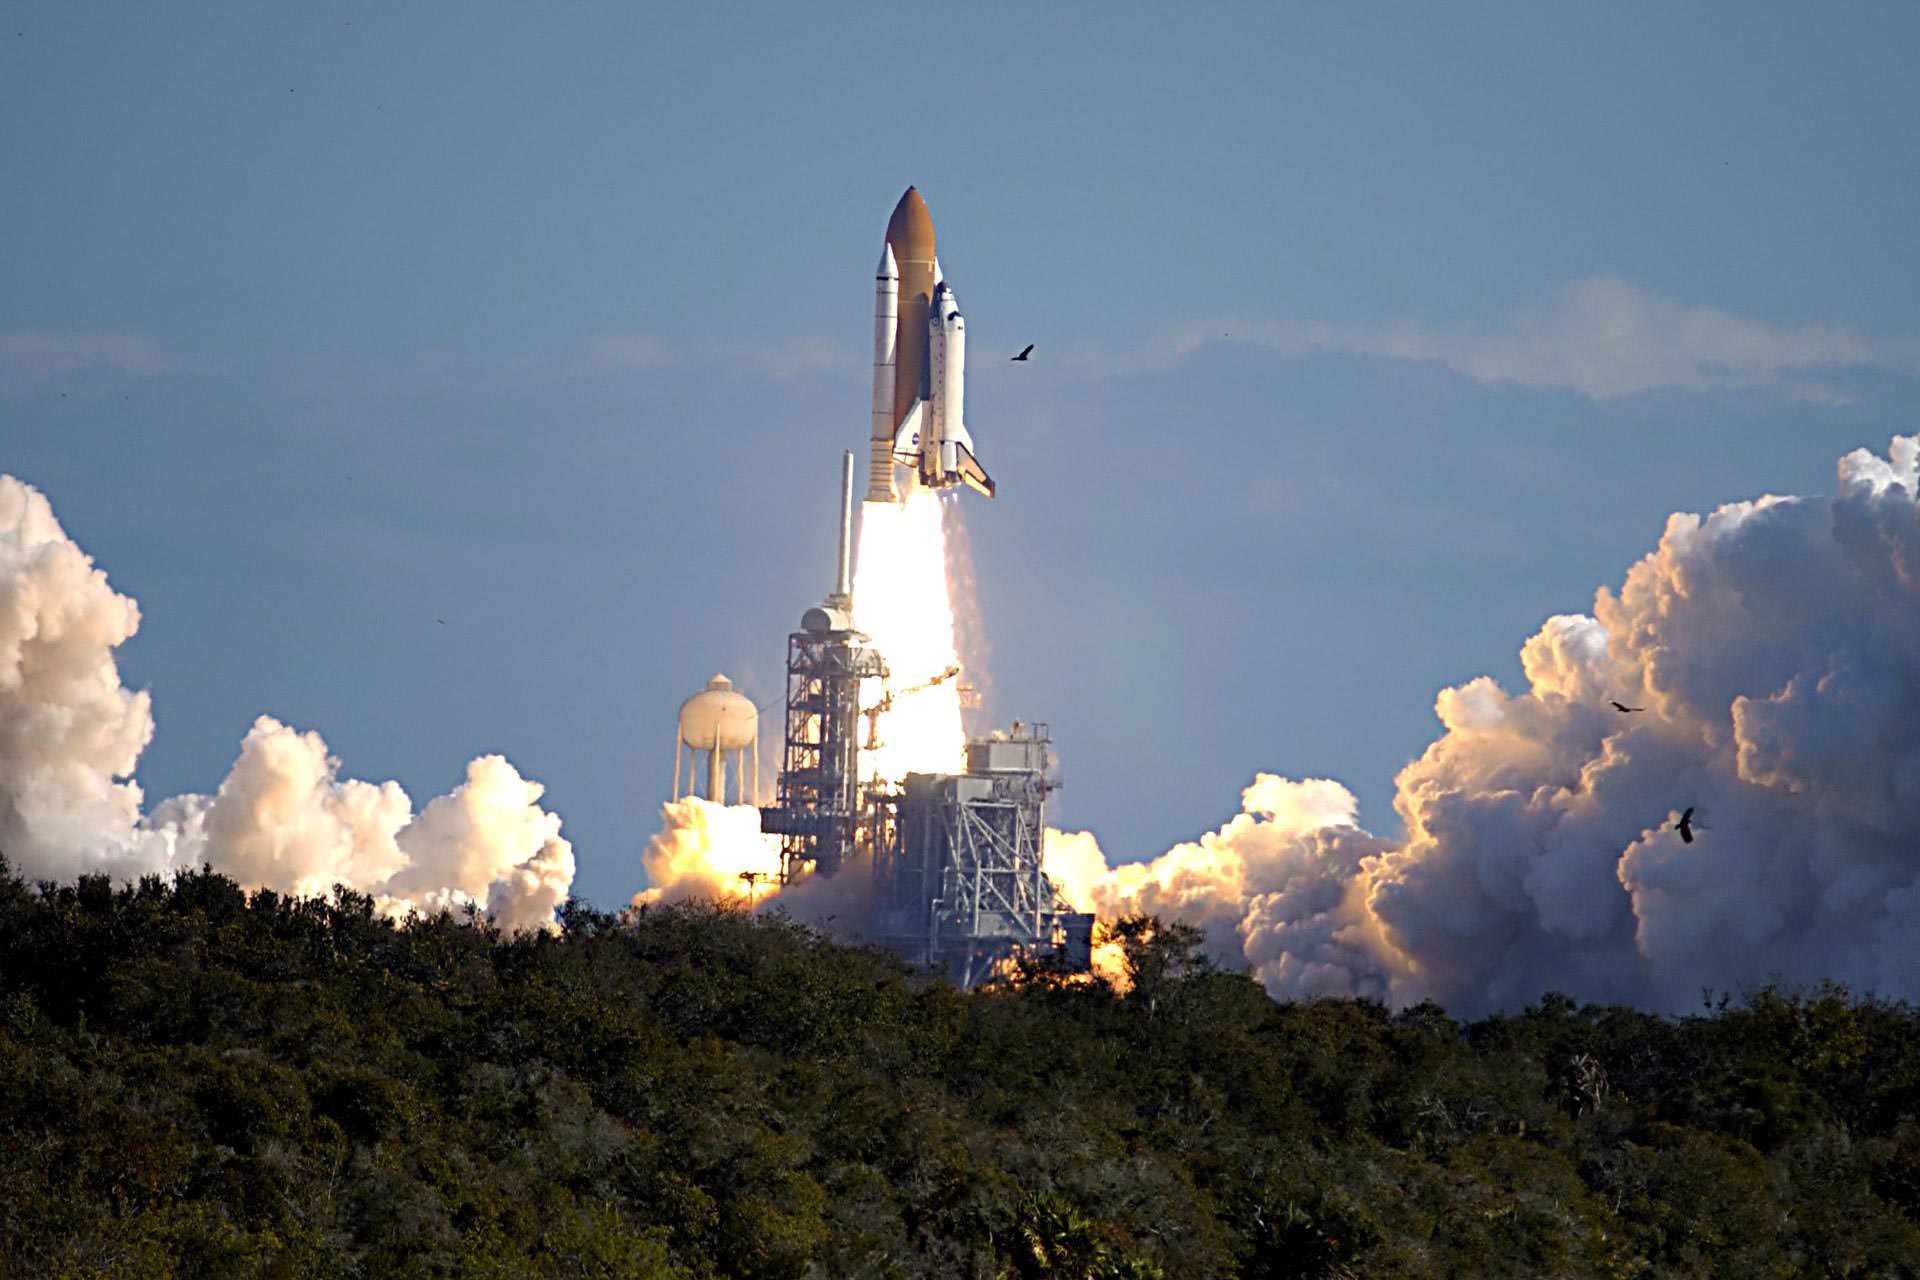 launch space shuttle columbia 2003 63e7d8b1212860d0e4c7ed3f